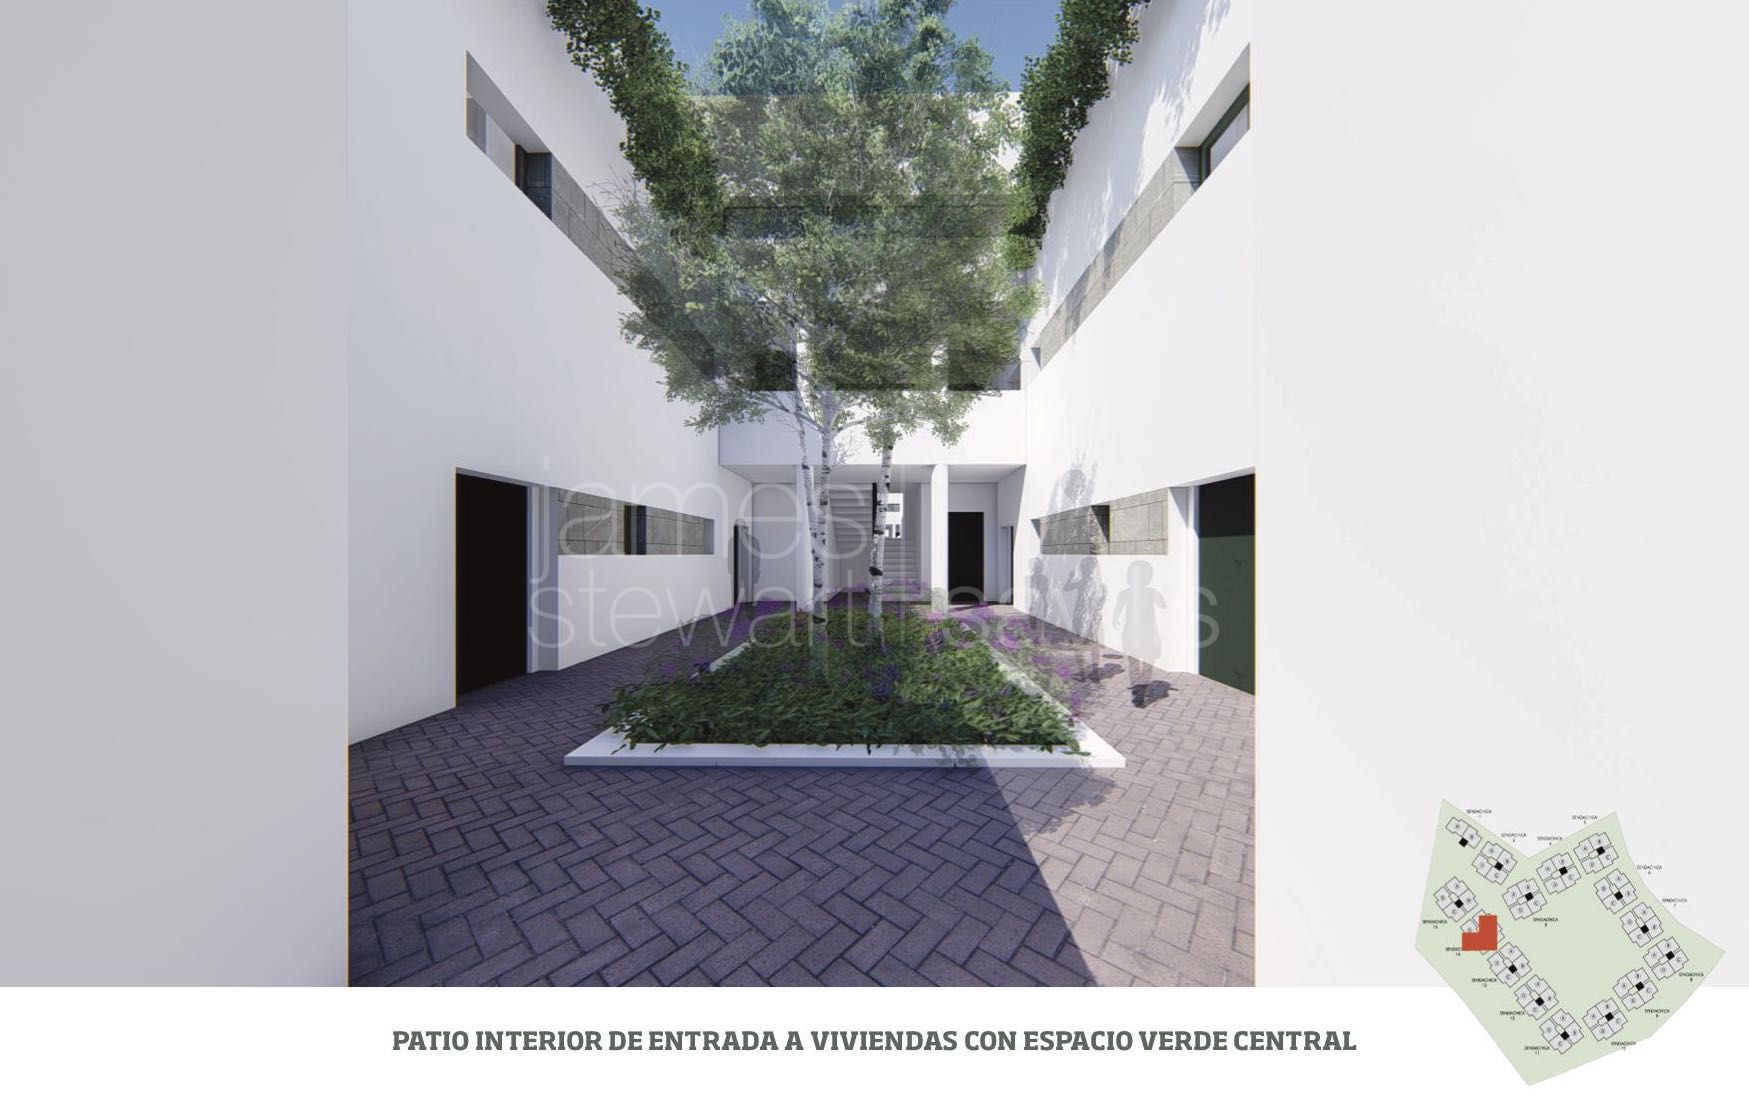 SENDA CHICA - new contemporary gated community within Sotogrande € 404,000 plus VAT